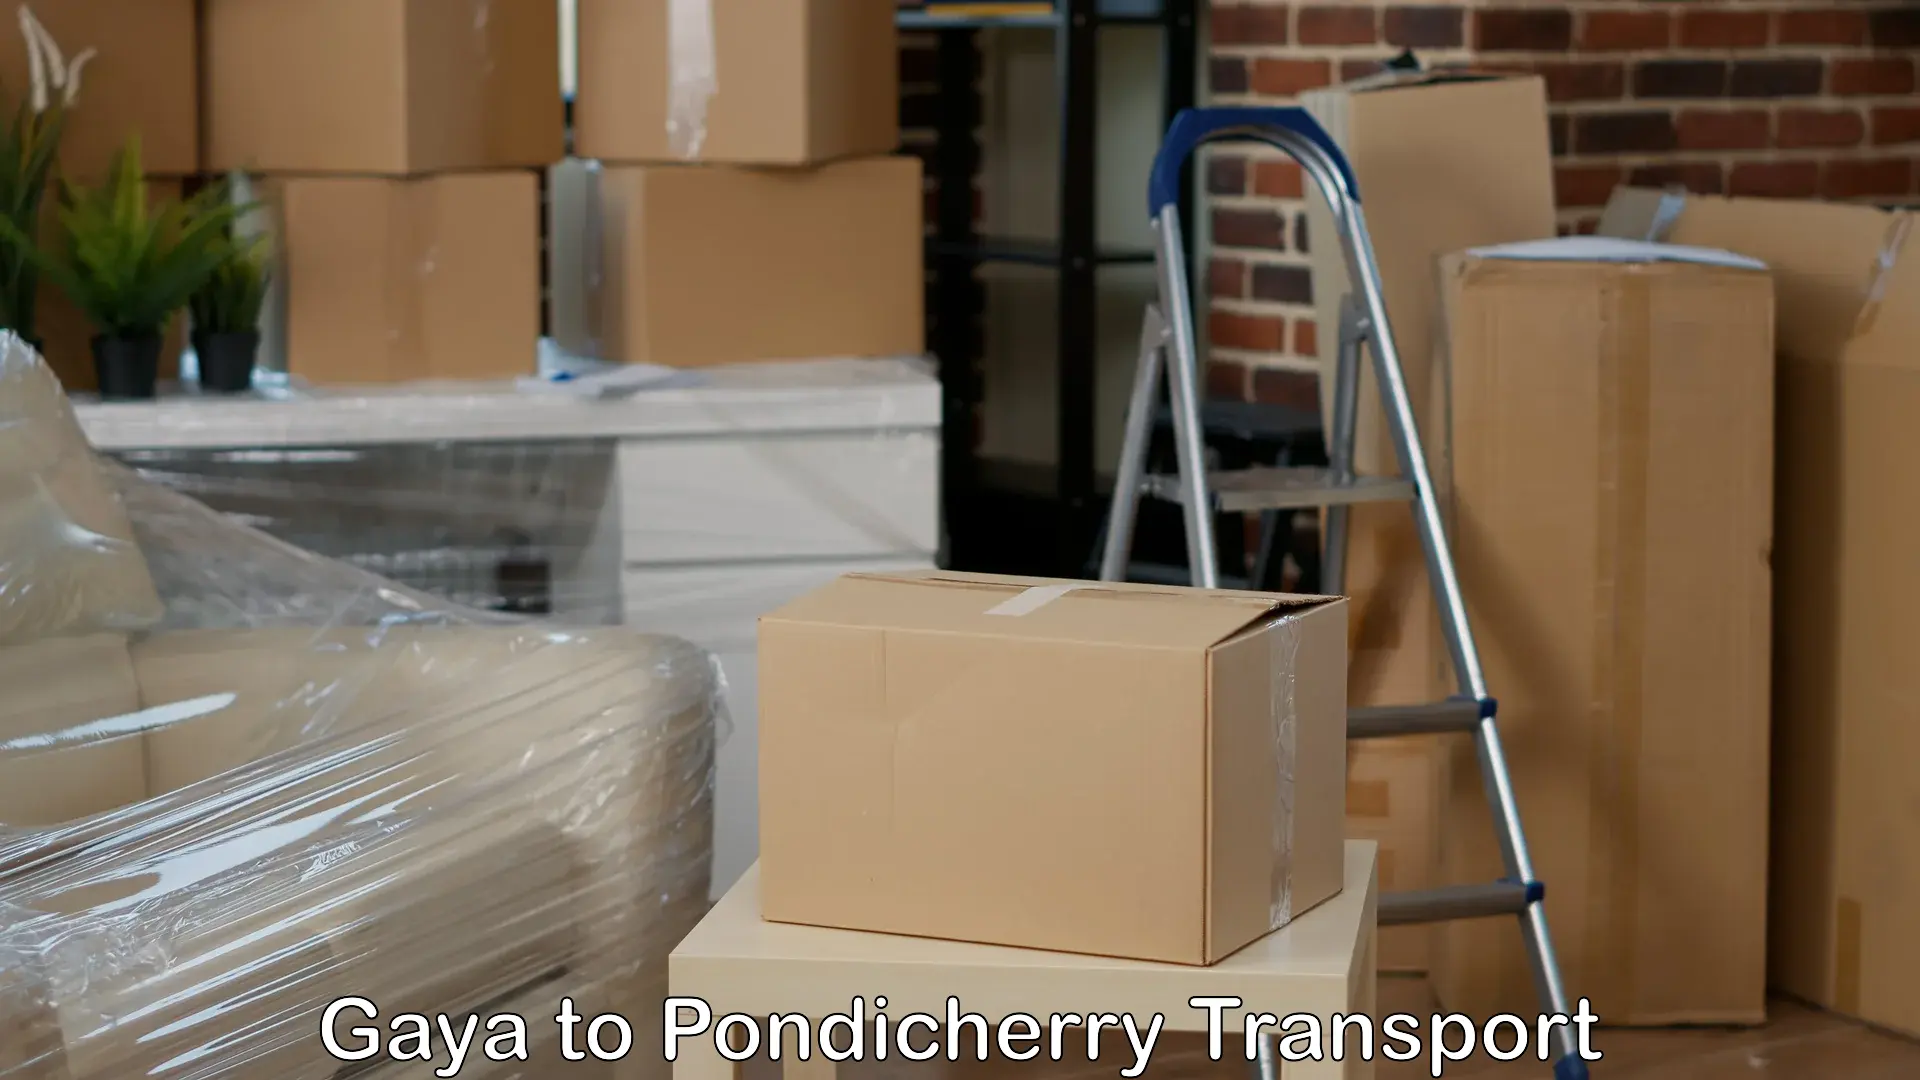 Delivery service Gaya to Pondicherry